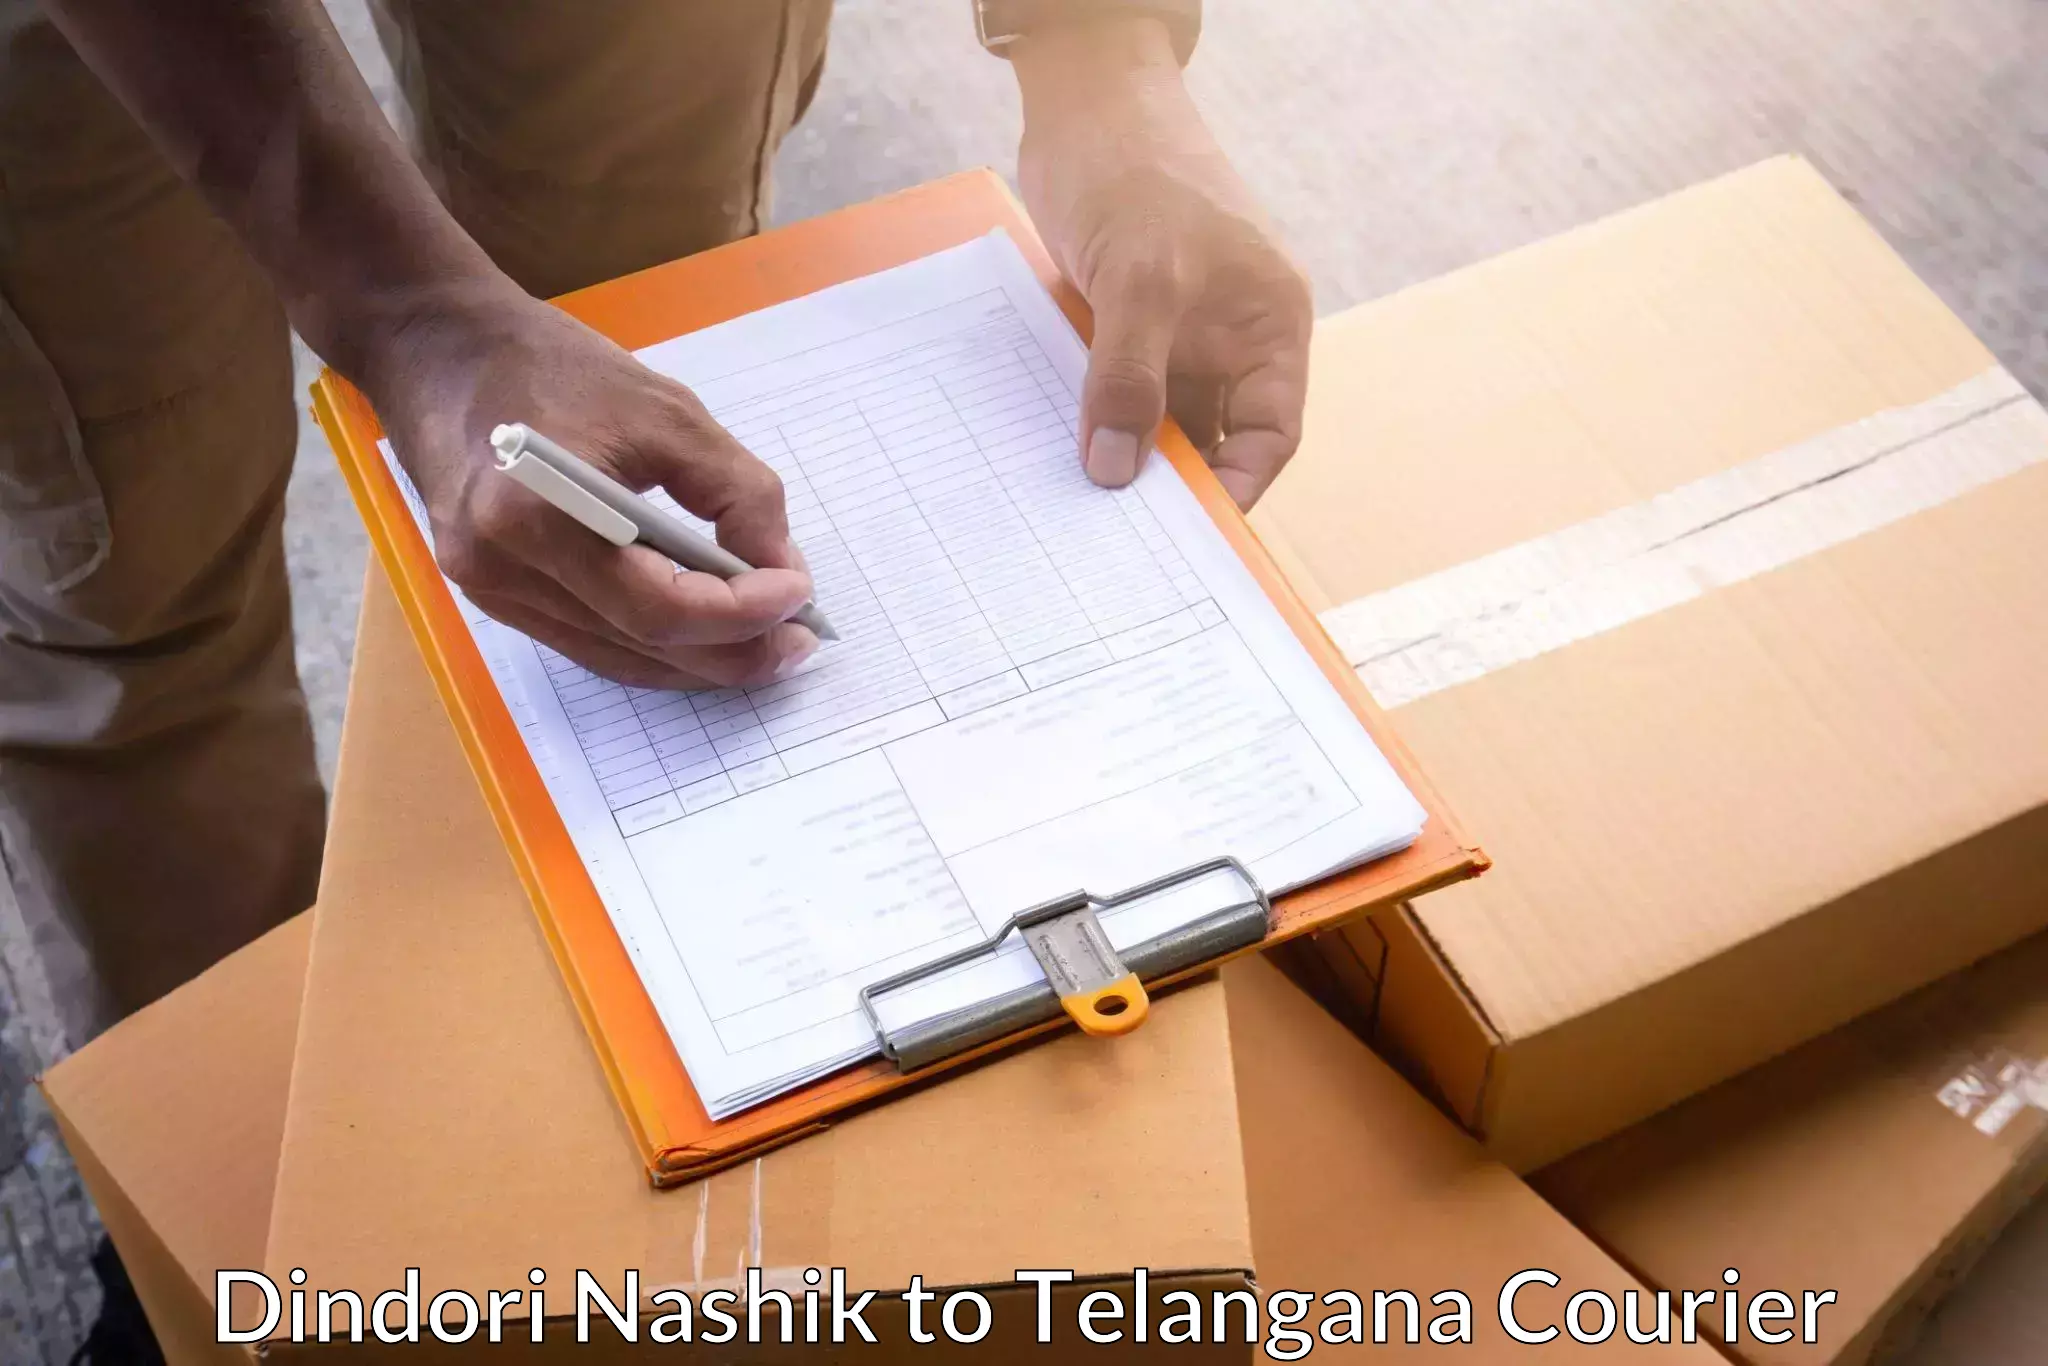 Courier service innovation Dindori Nashik to Gudur Warangal